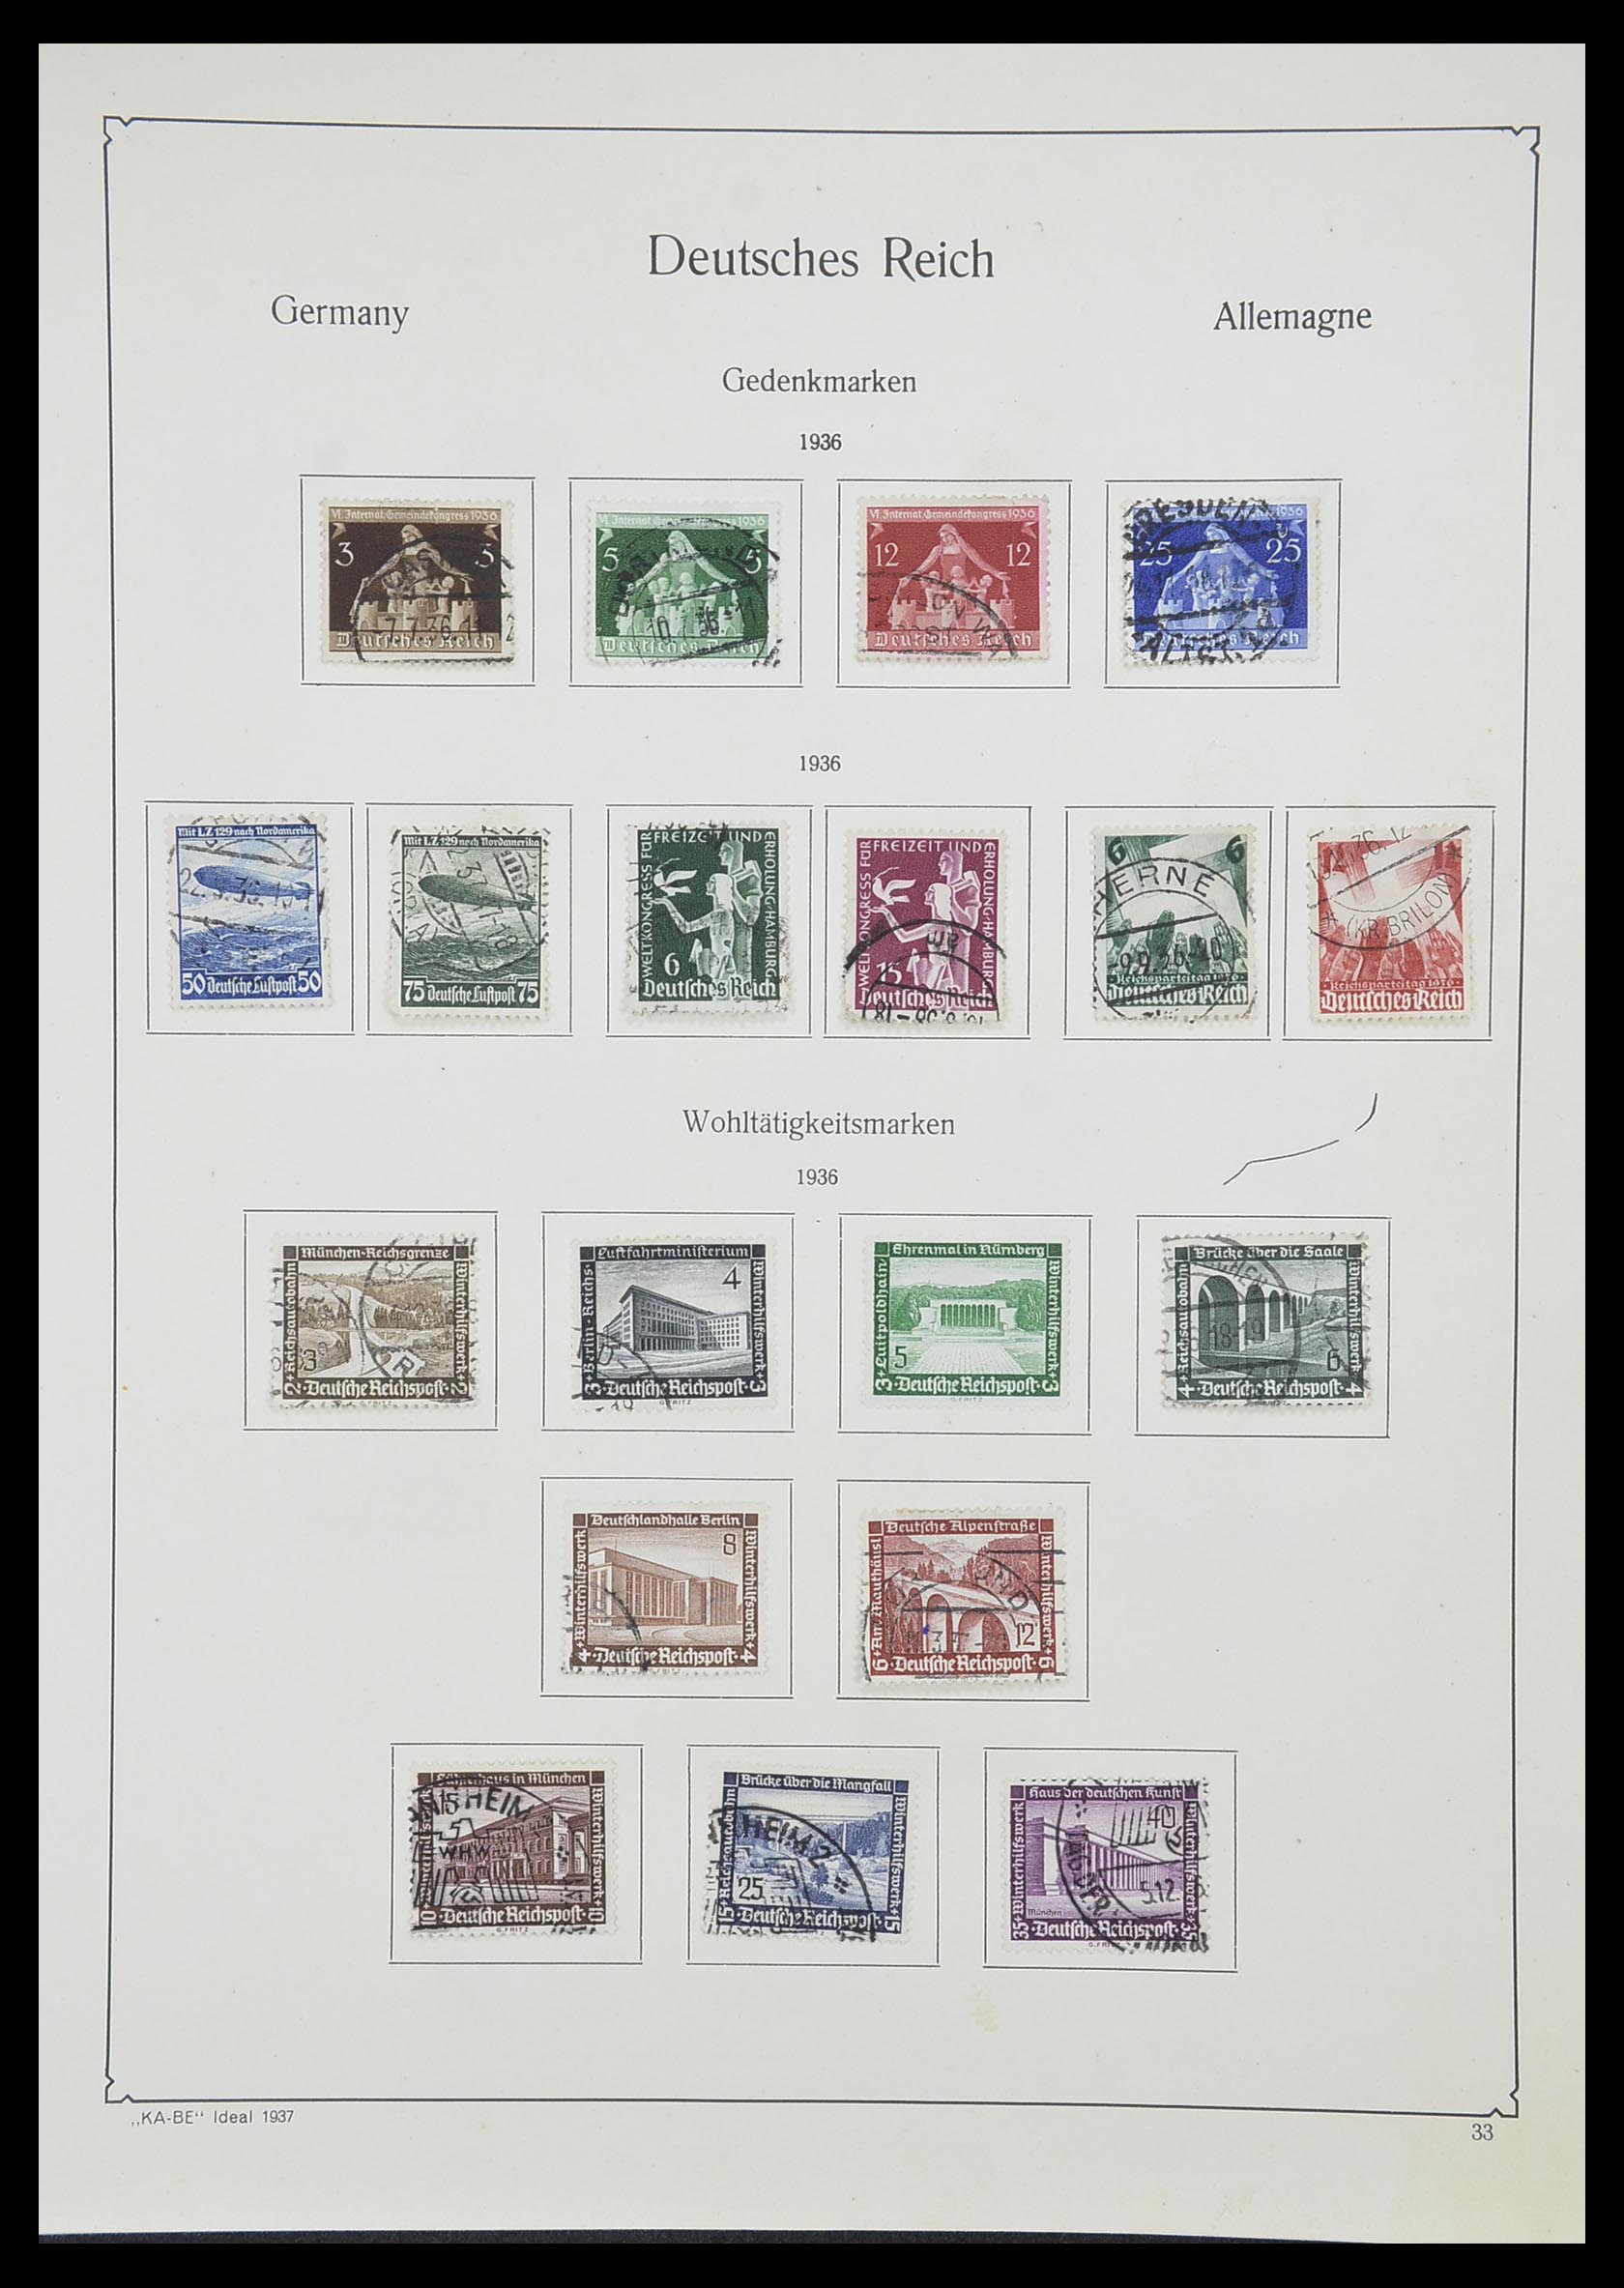 33359 041 - Stamp collection 33359 German Reich 1872-1945.